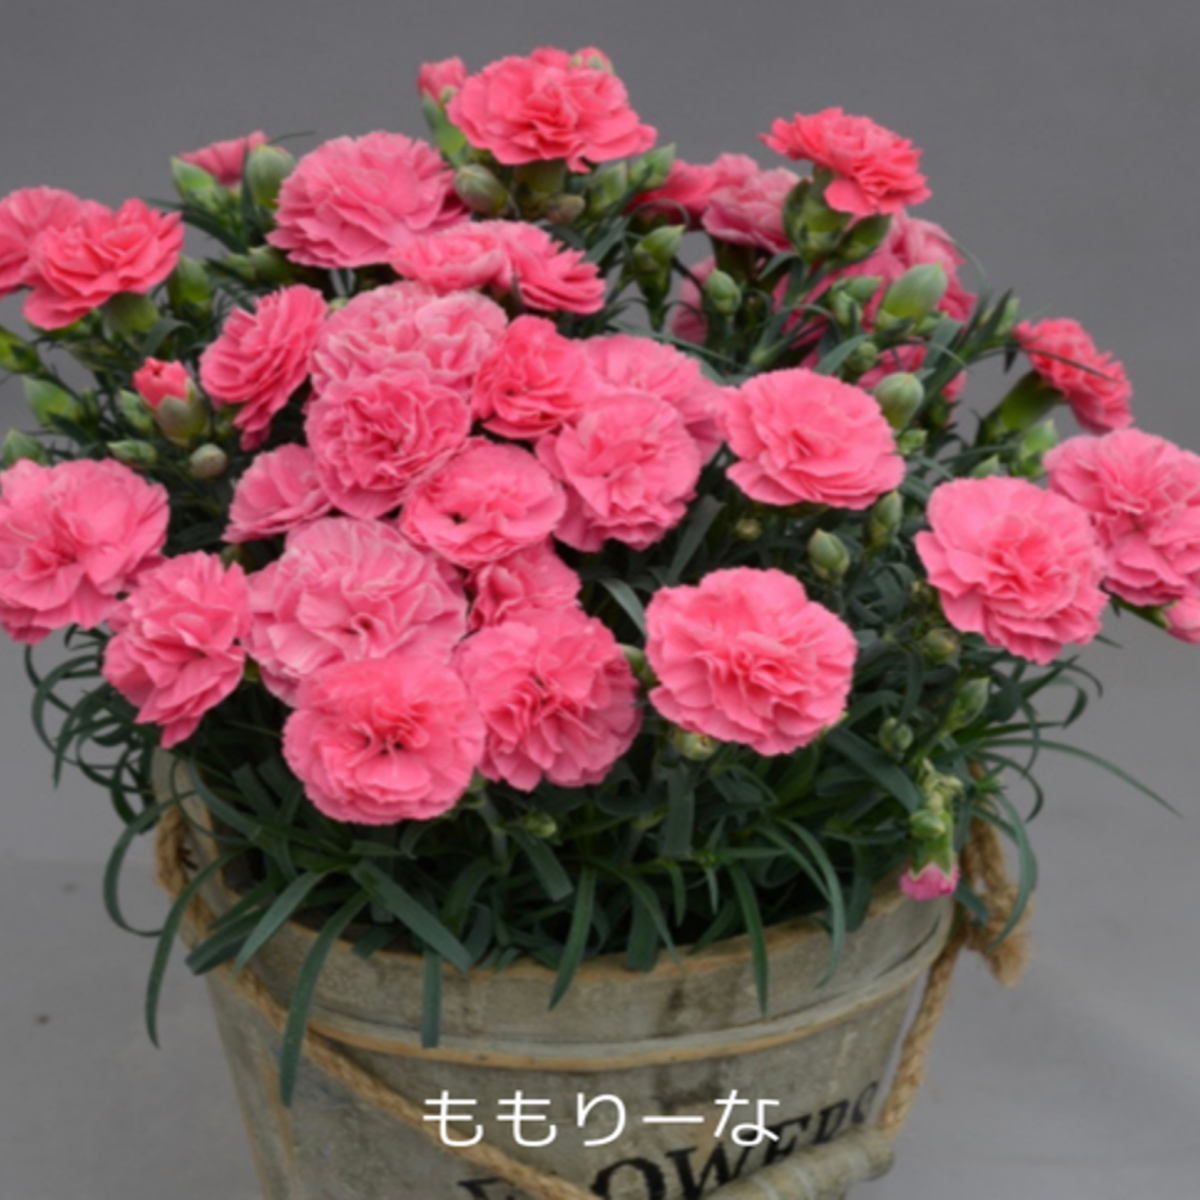 No.7 CARNATION (ピンク) カーネーション 本庄産 鉢植え 花 フラワー 